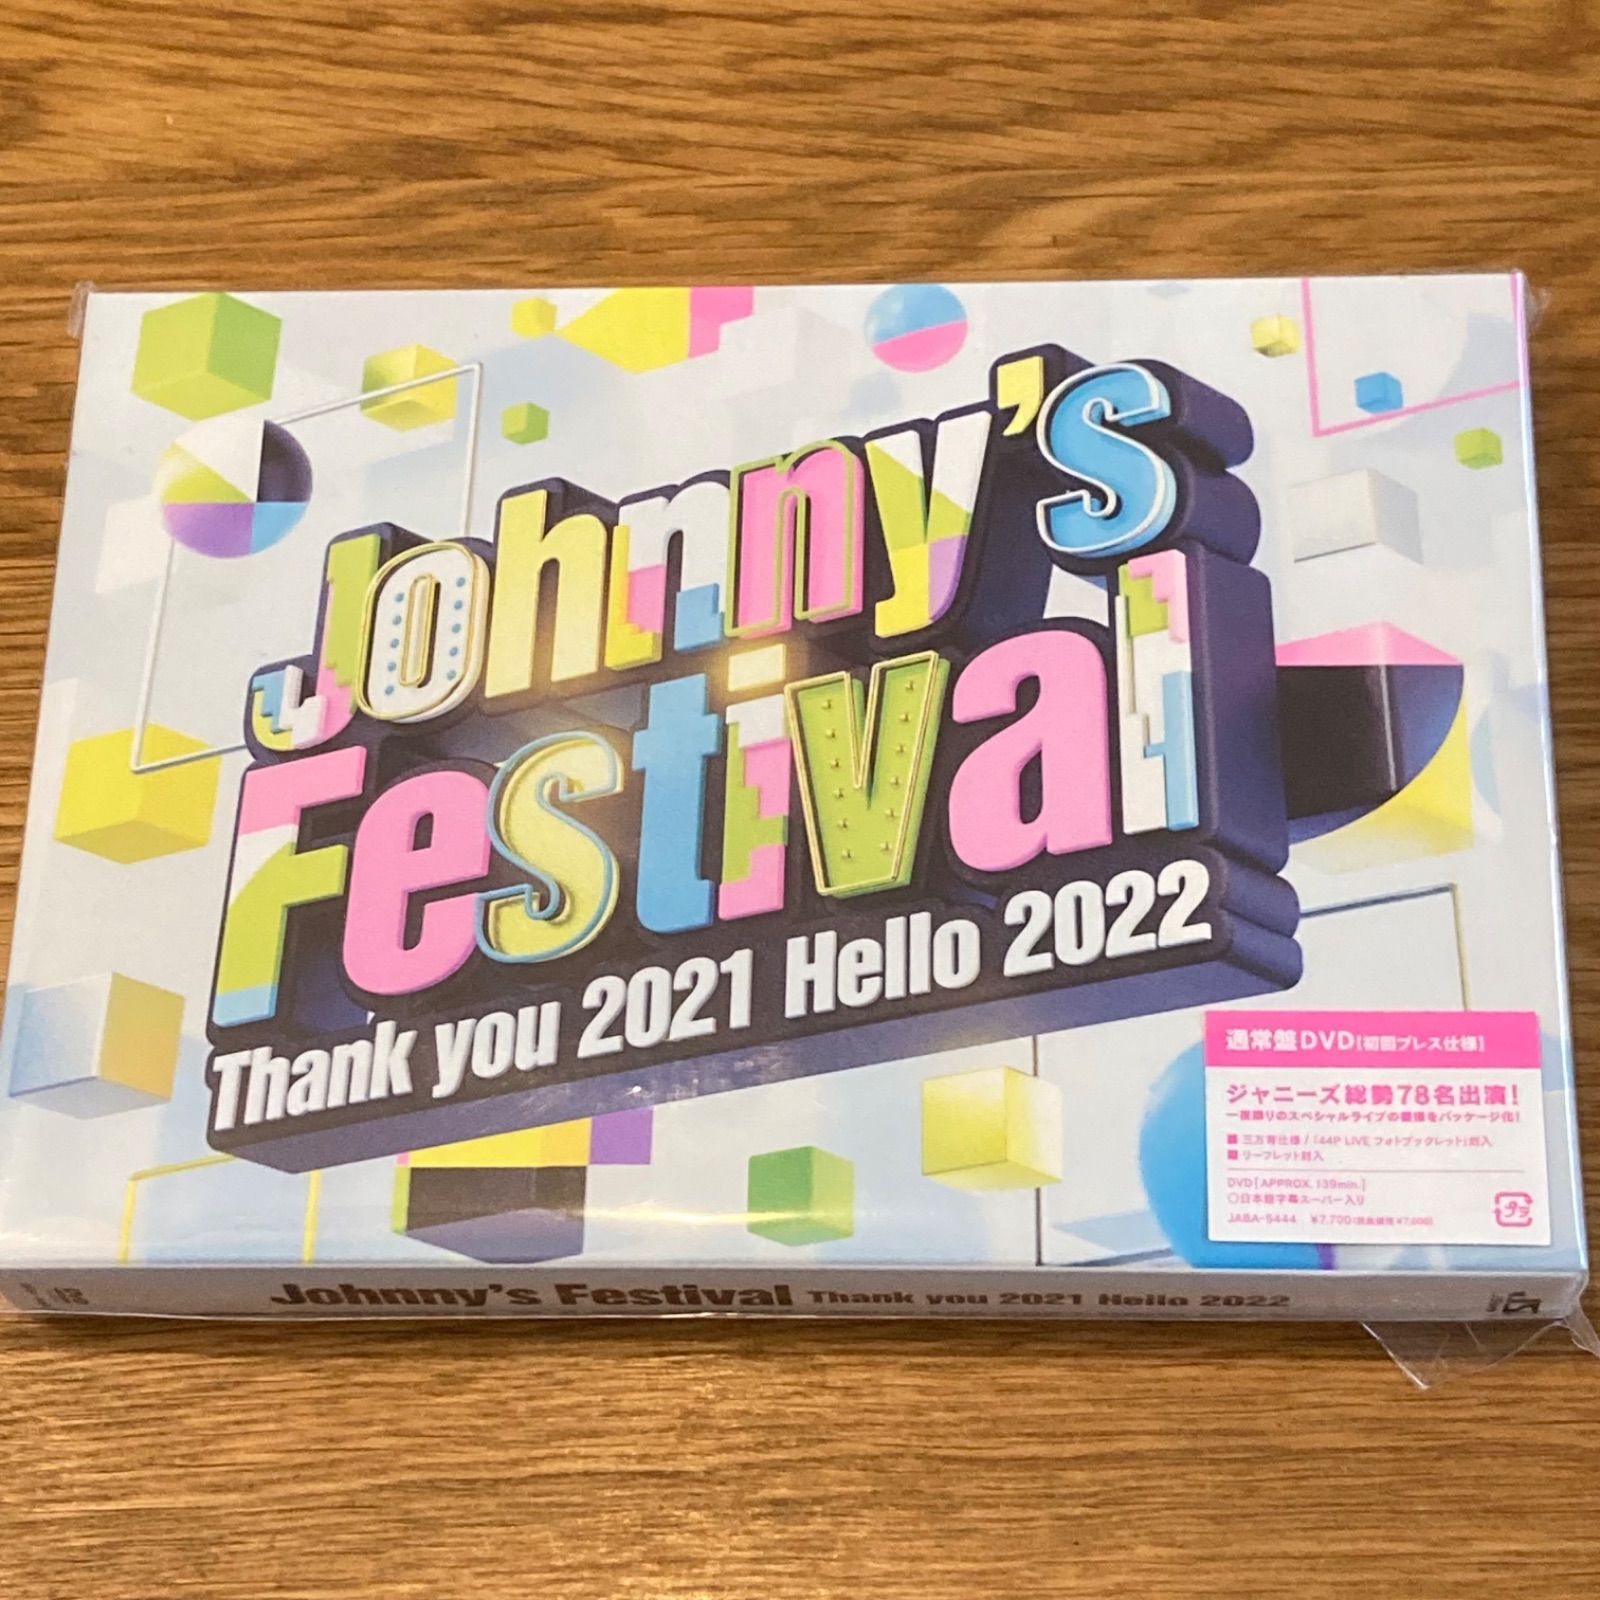 Johnny's Festival Thank you 2021 【DVD】 - メルカリ